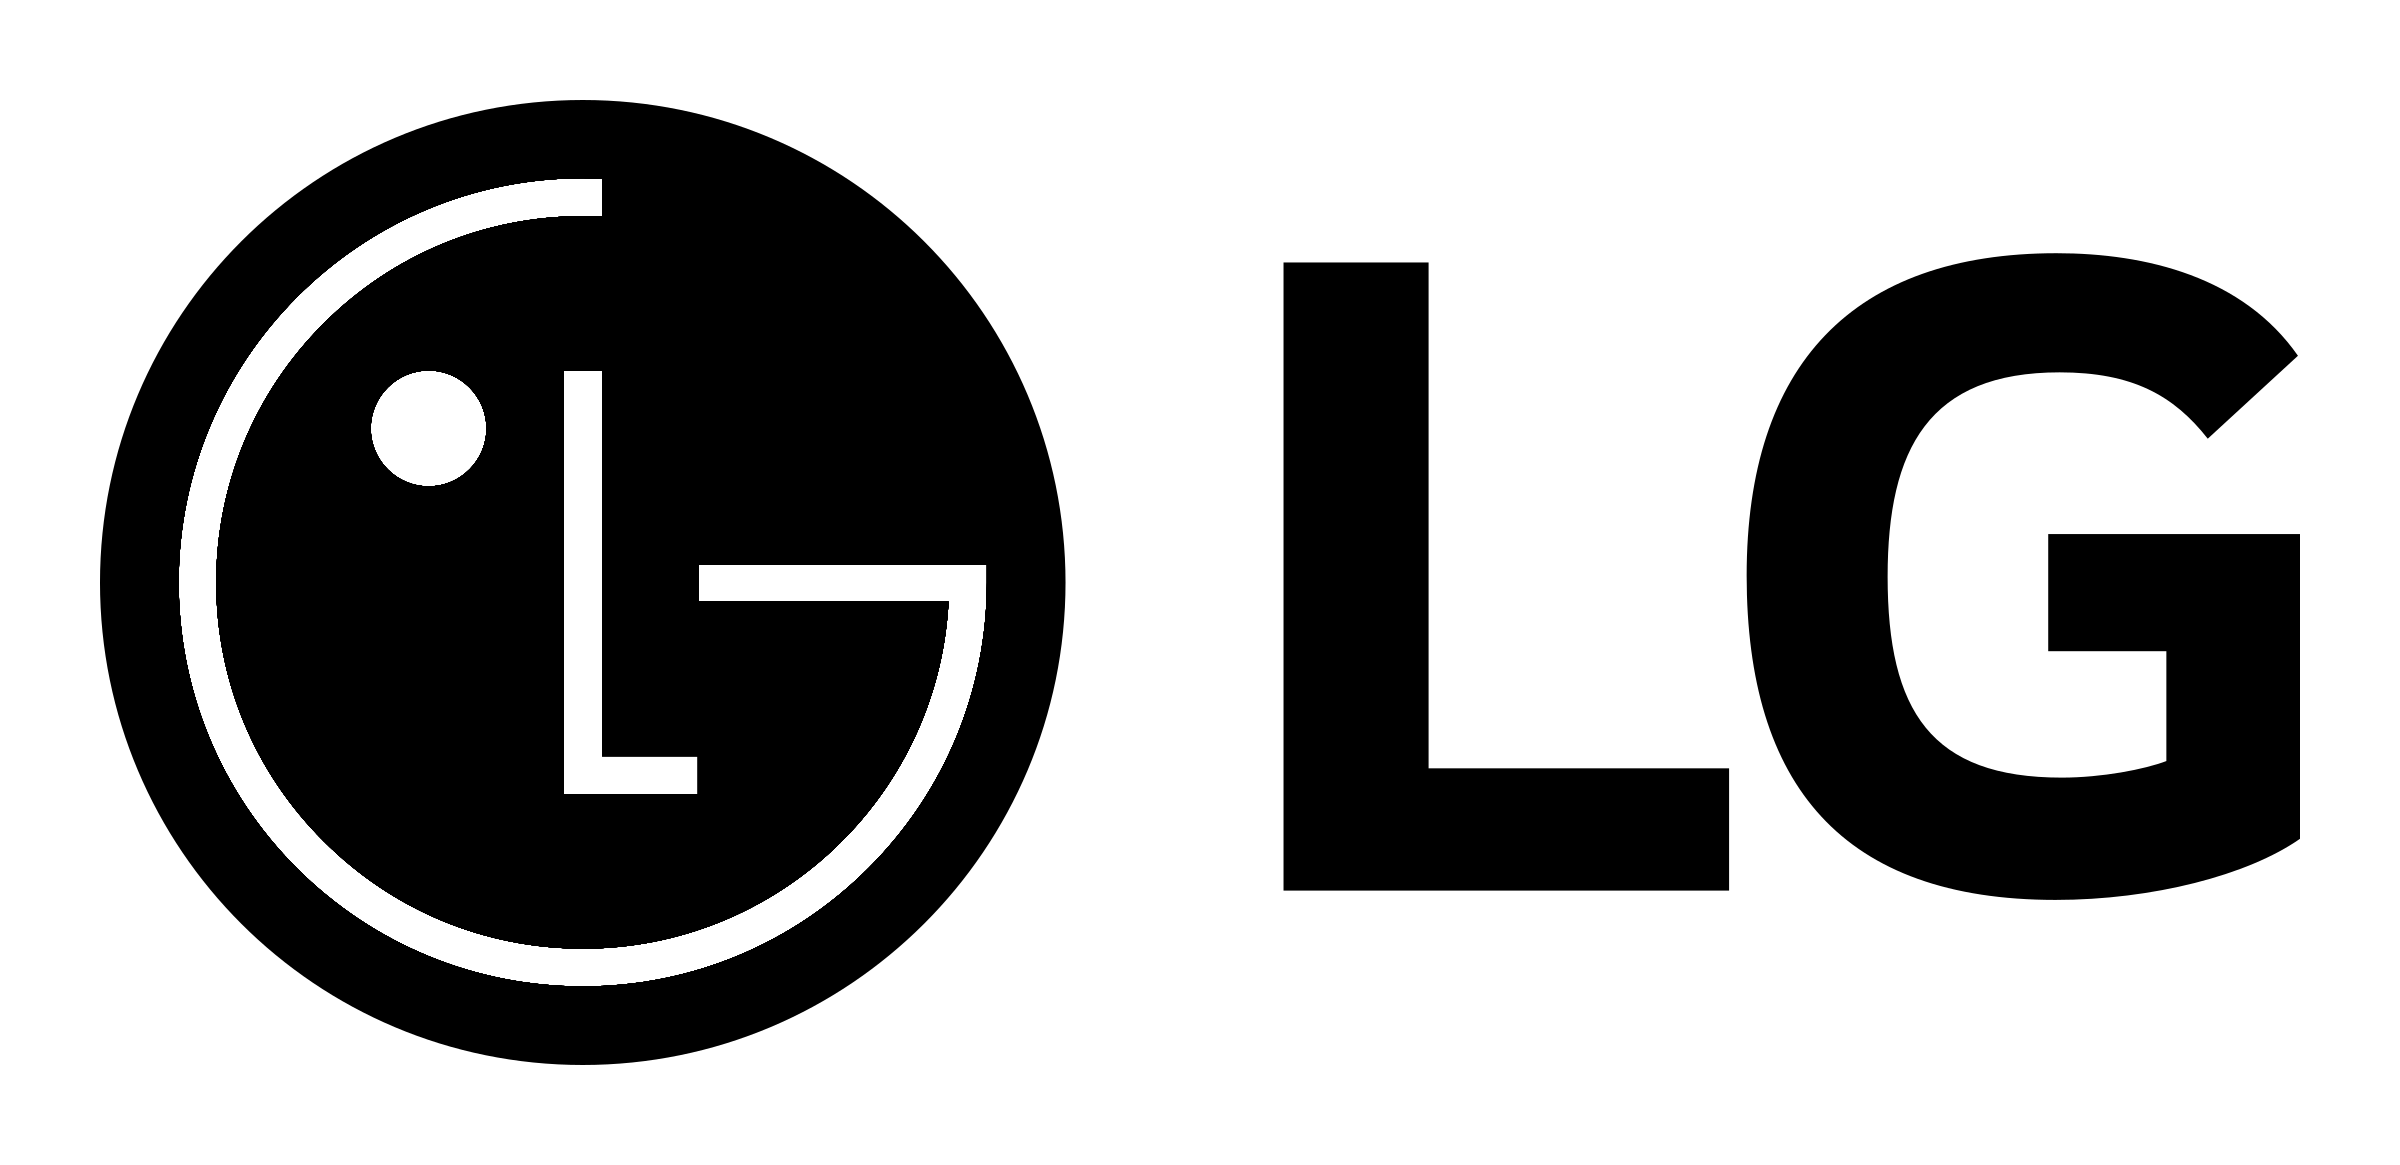 lg-logo-black-and-white.png